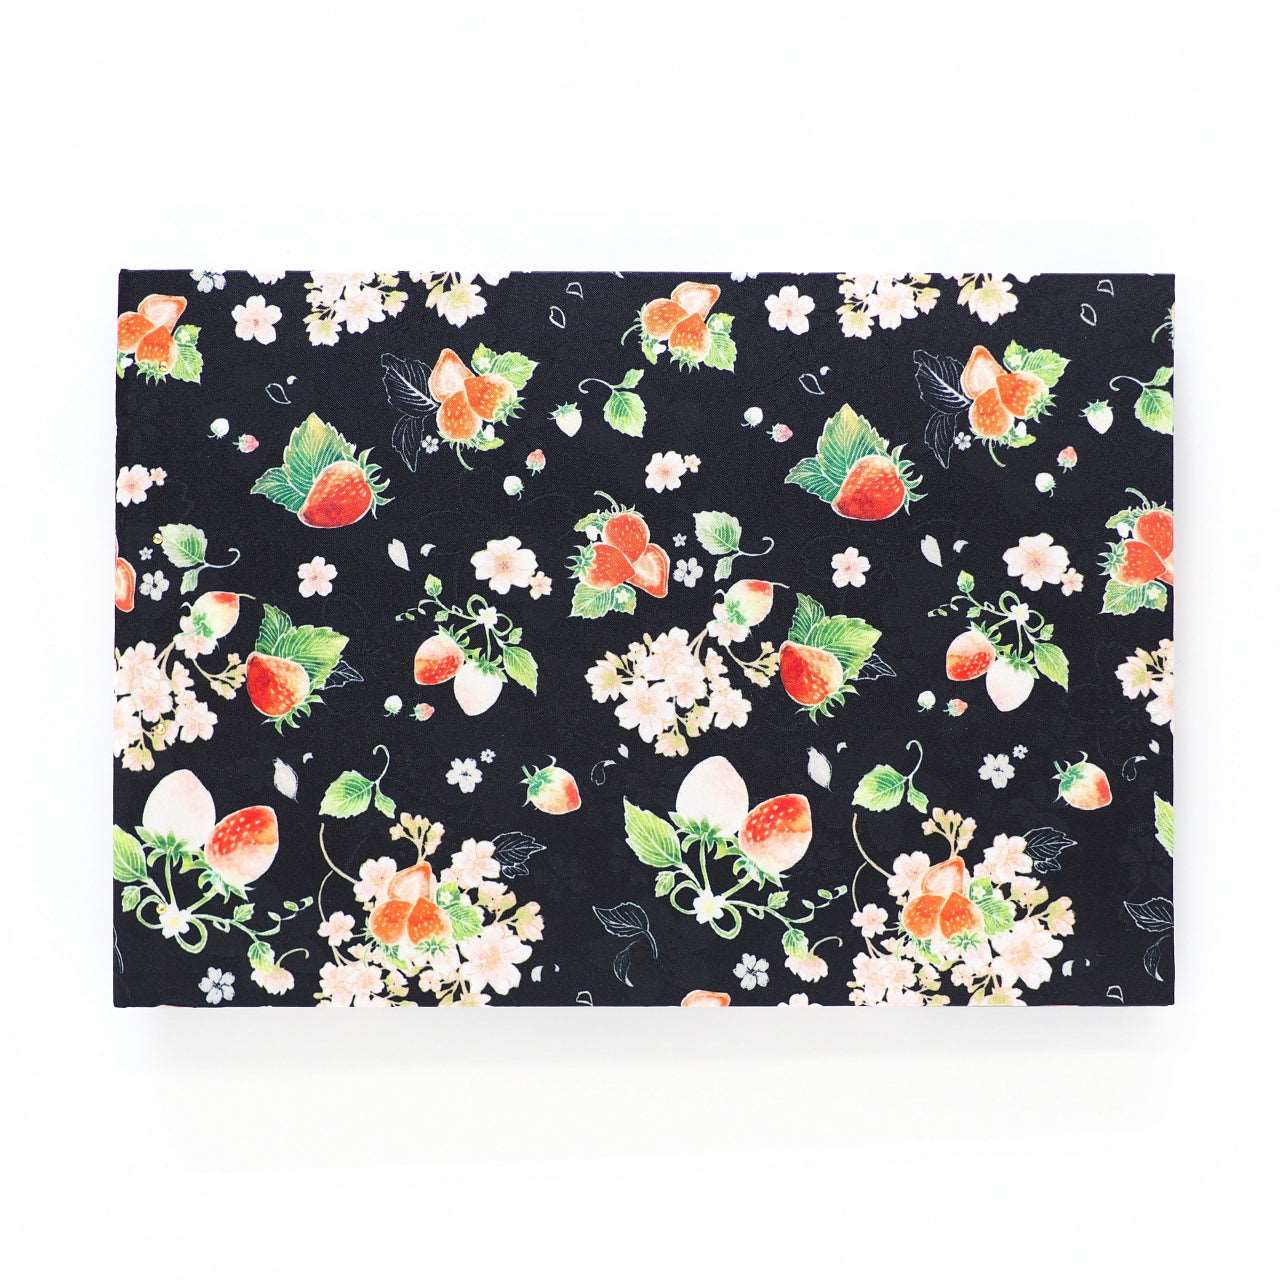 Goshuin holder (spread size) "Strawberry Sakura" black